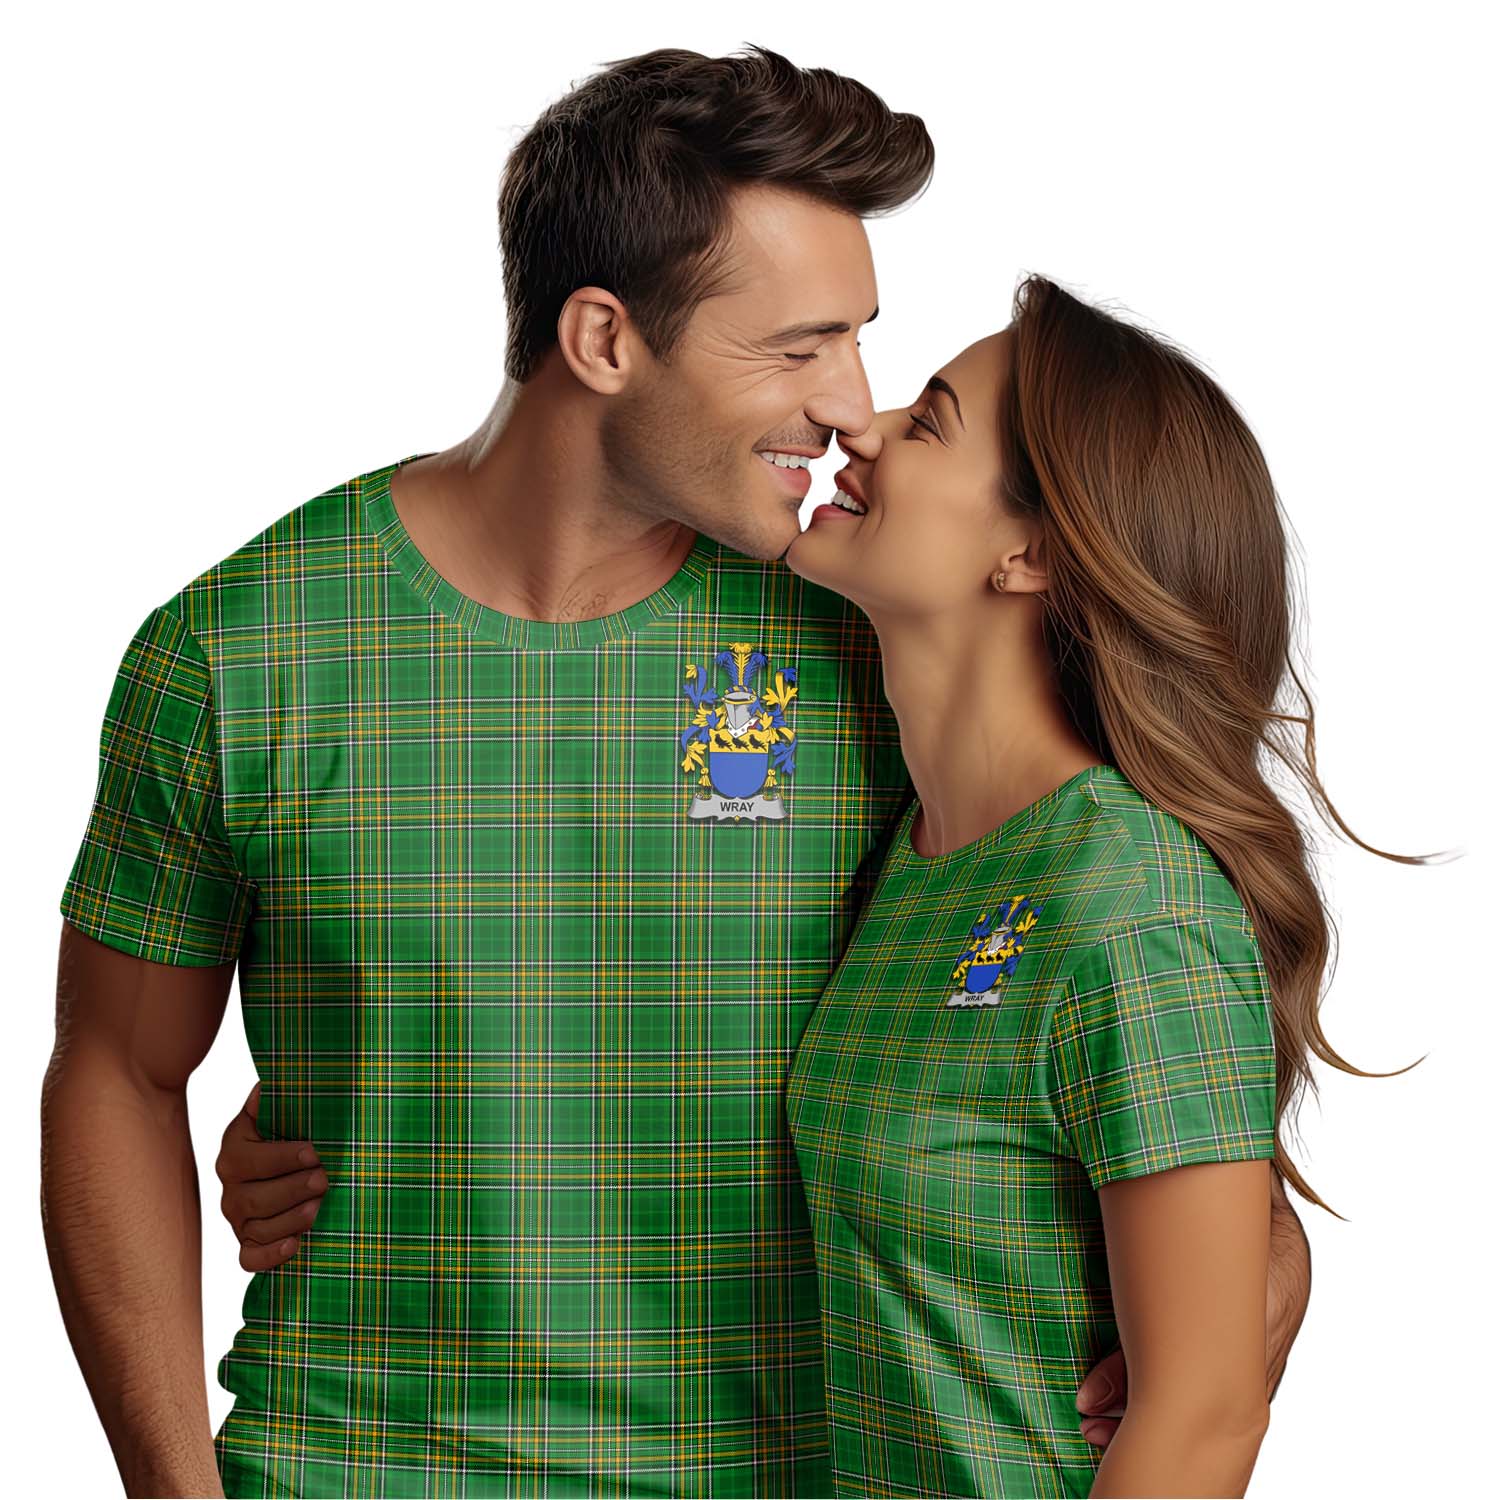 Tartan Vibes Clothing Wray Ireland Clan Tartan T-Shirt with Family Seal